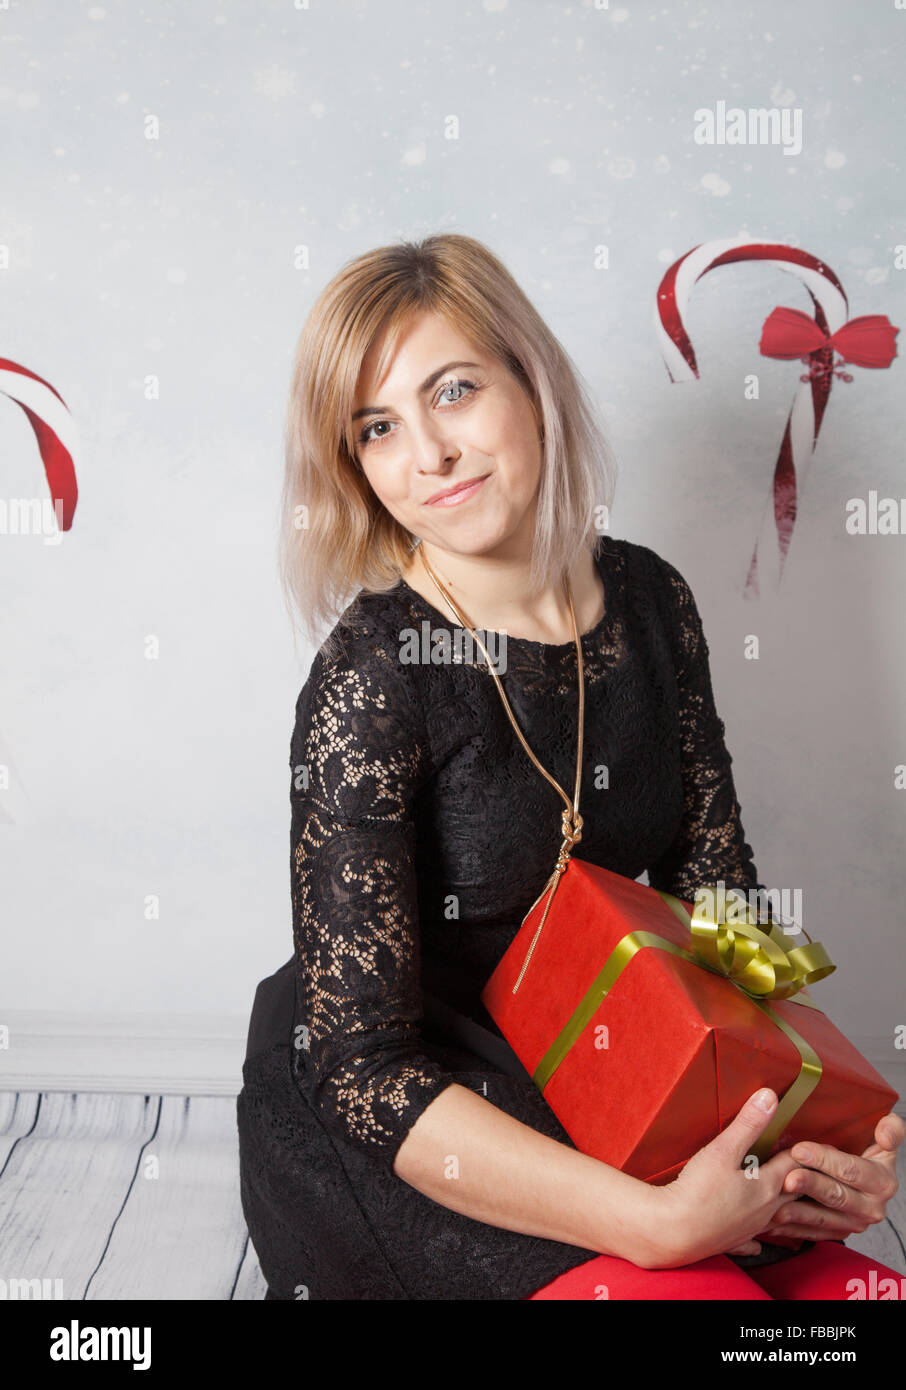 Beautiful woman portrait, Christmas themed portrait, studio shot. Stock Photo